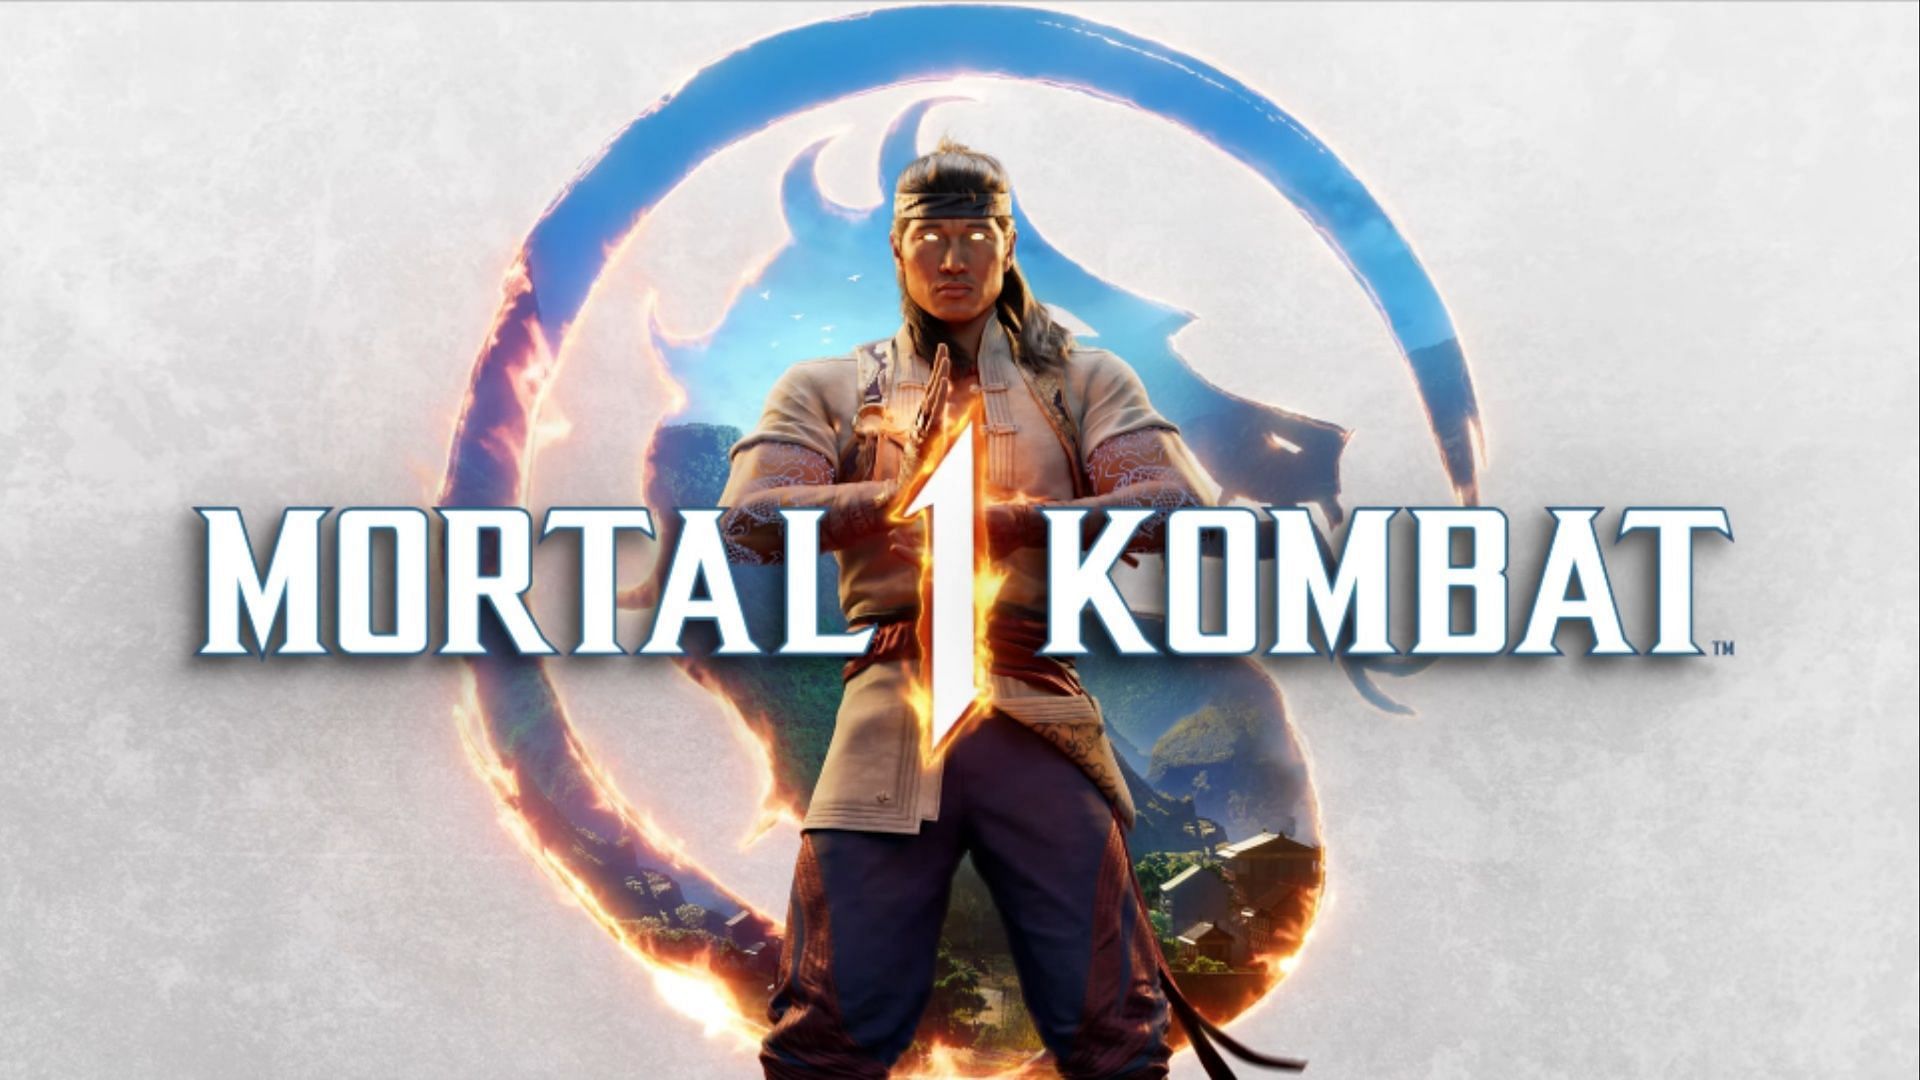 Mortal Kombat 1 is back!